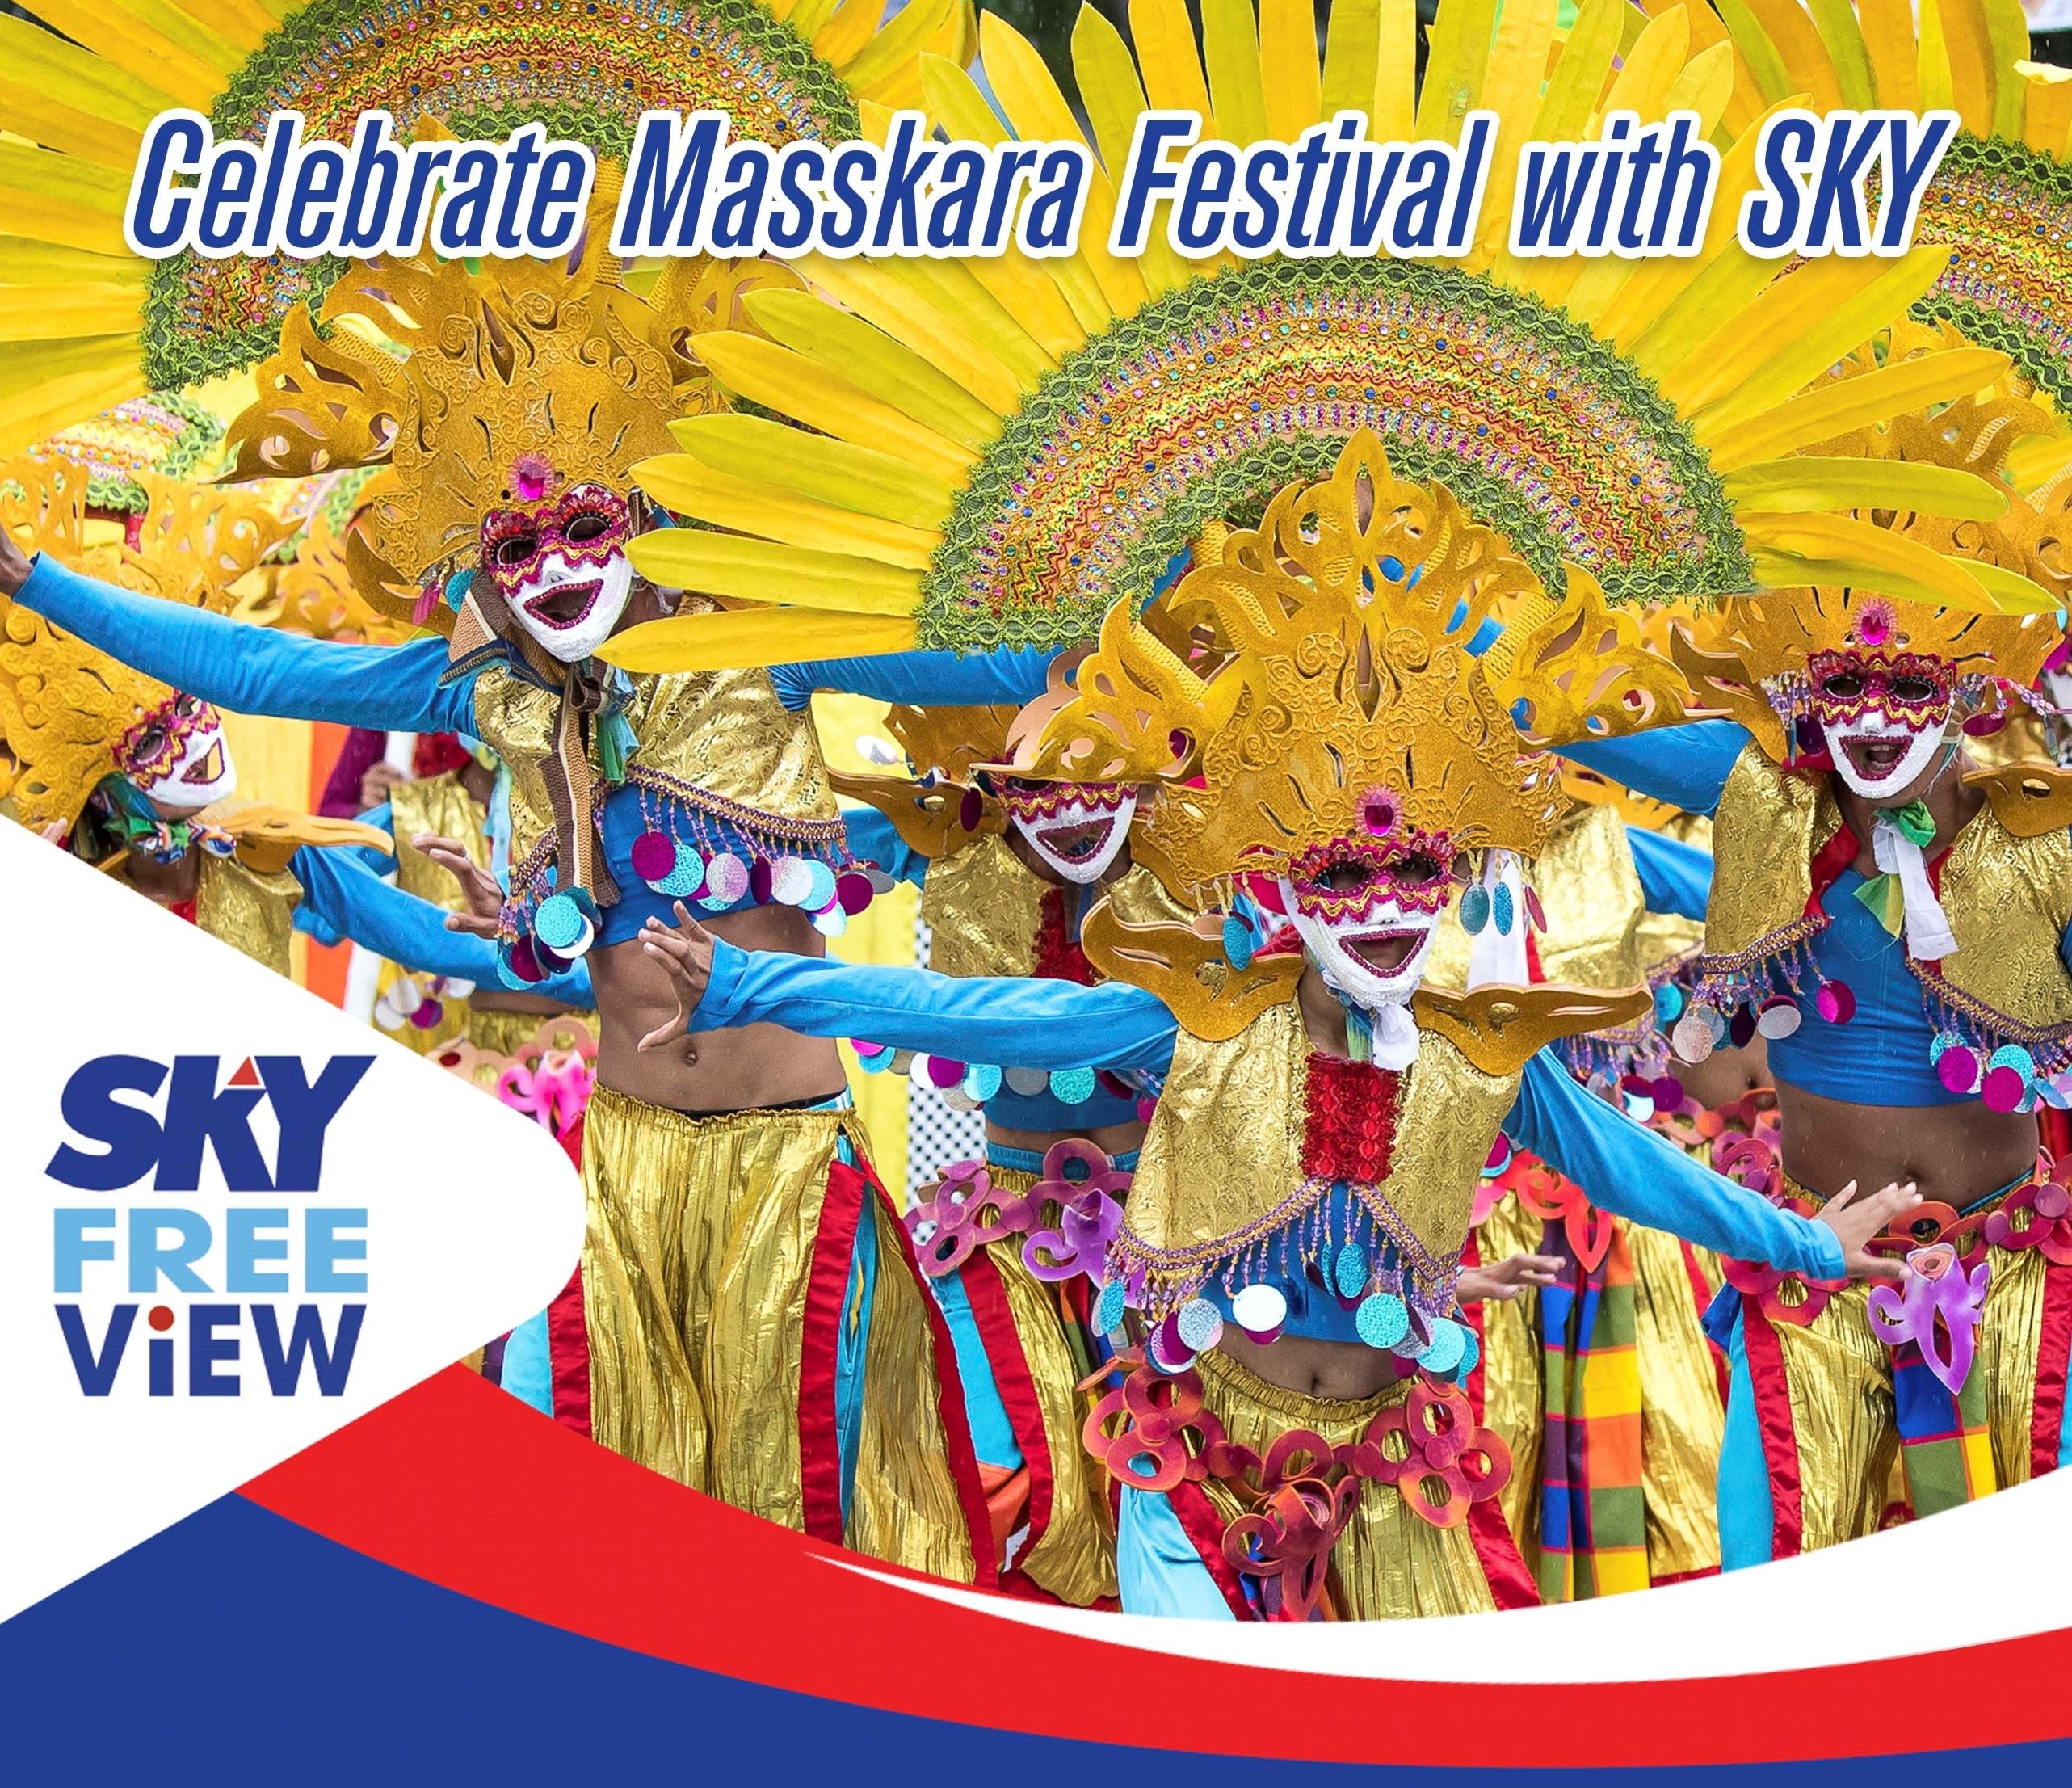 Bacolod’s Masskara Festival on SKY FREEView